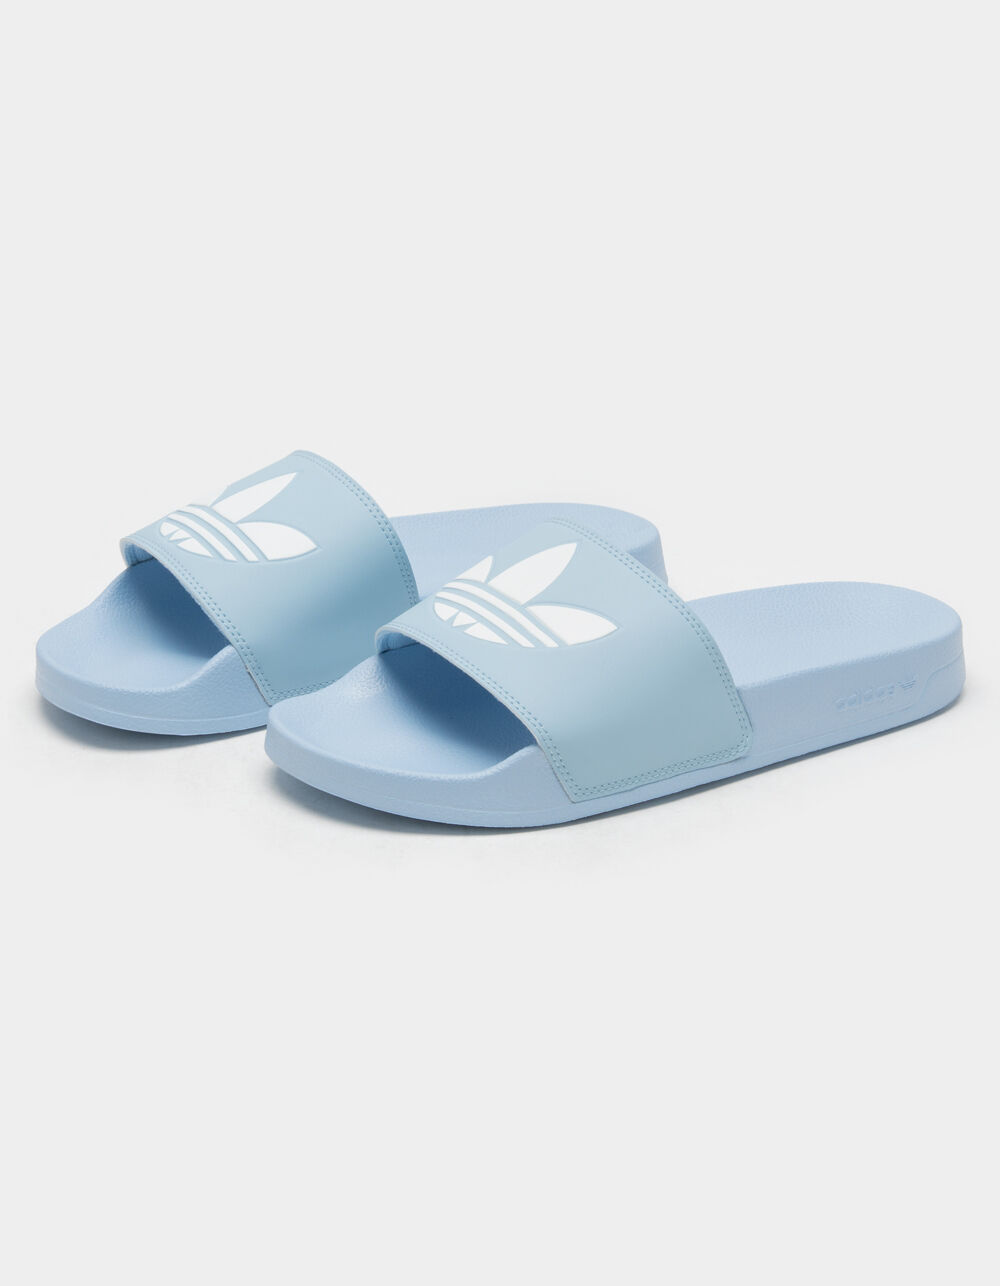 de acuerdo a Cambiarse de ropa lobo ADIDAS Adilette Lite Womens Baby Blue Slide Sandals - BABY BLUE | Tillys